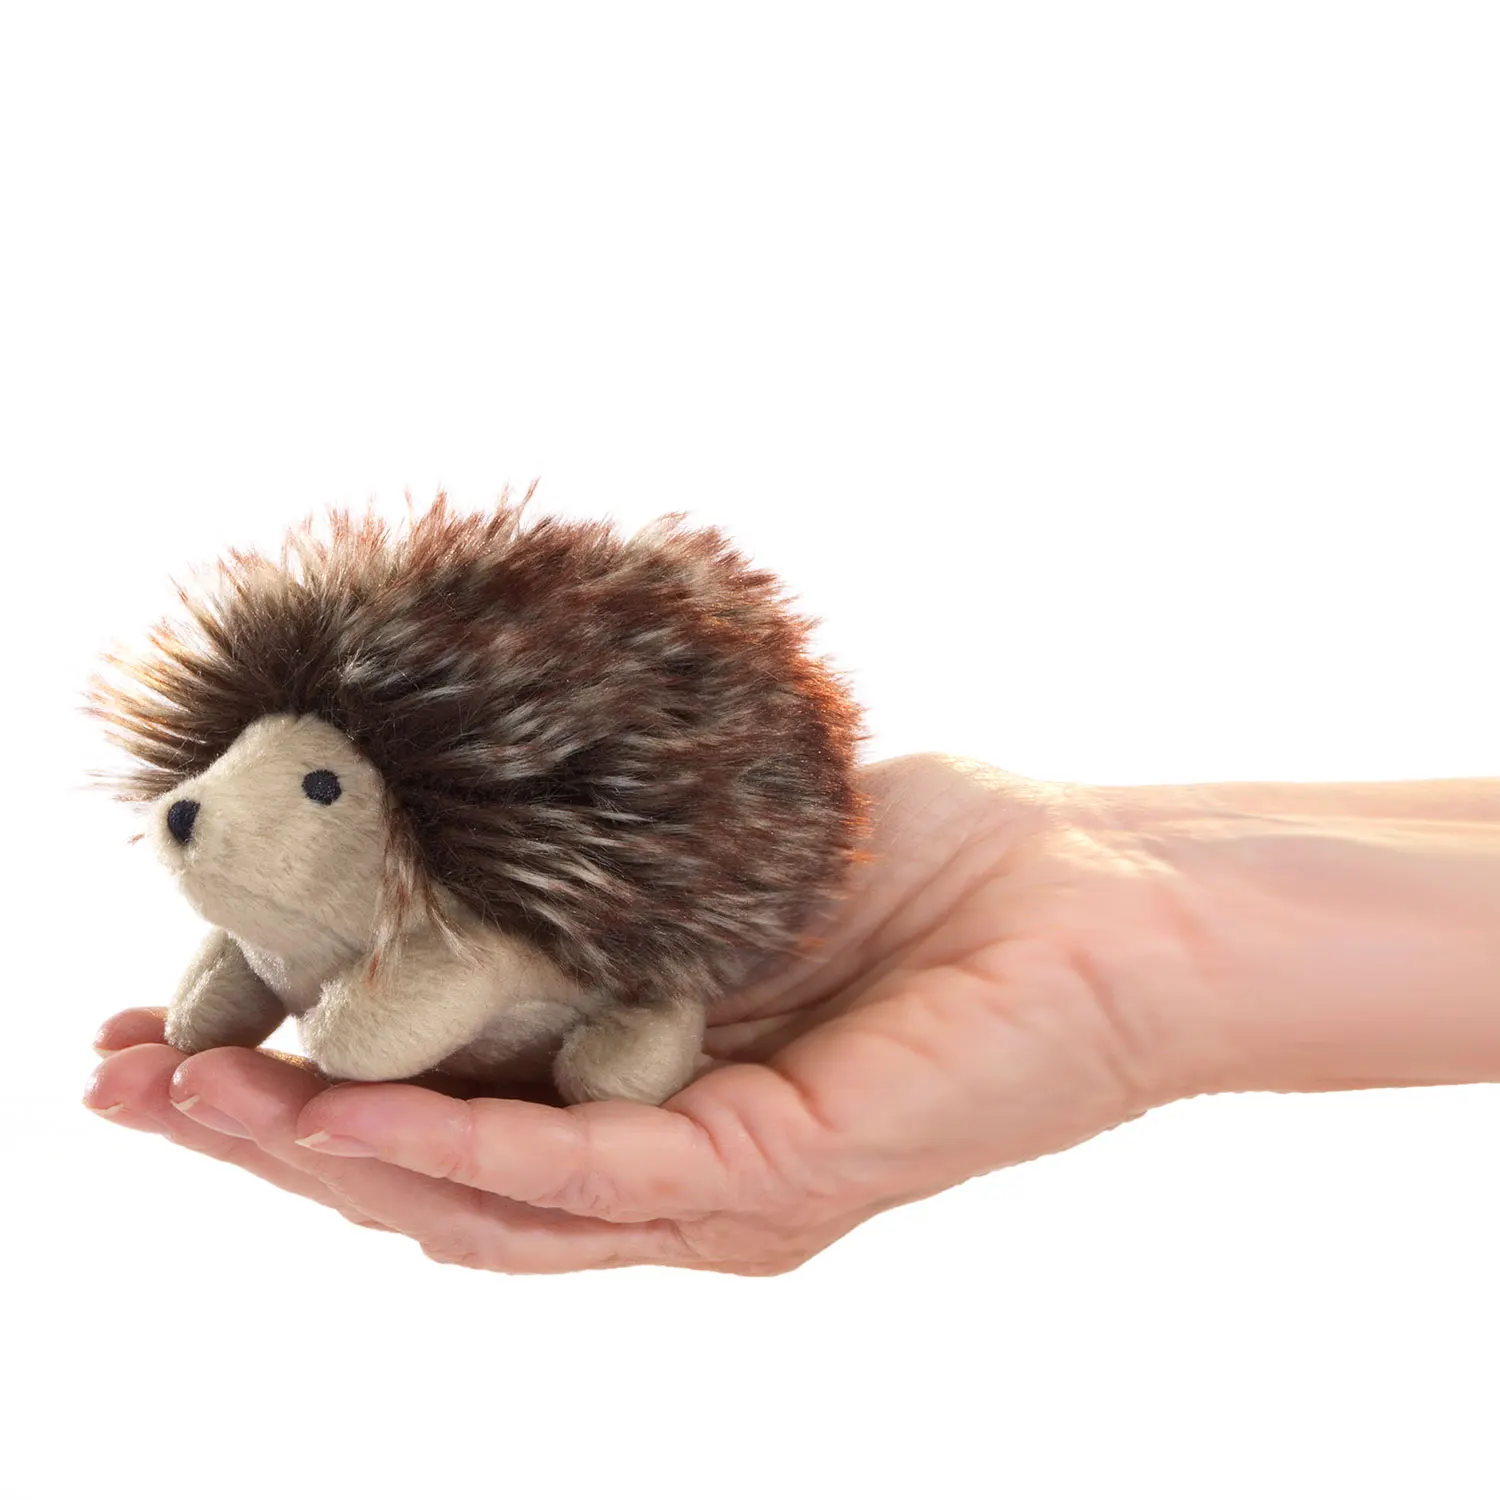 Mini Igel / Mini Hedgehog